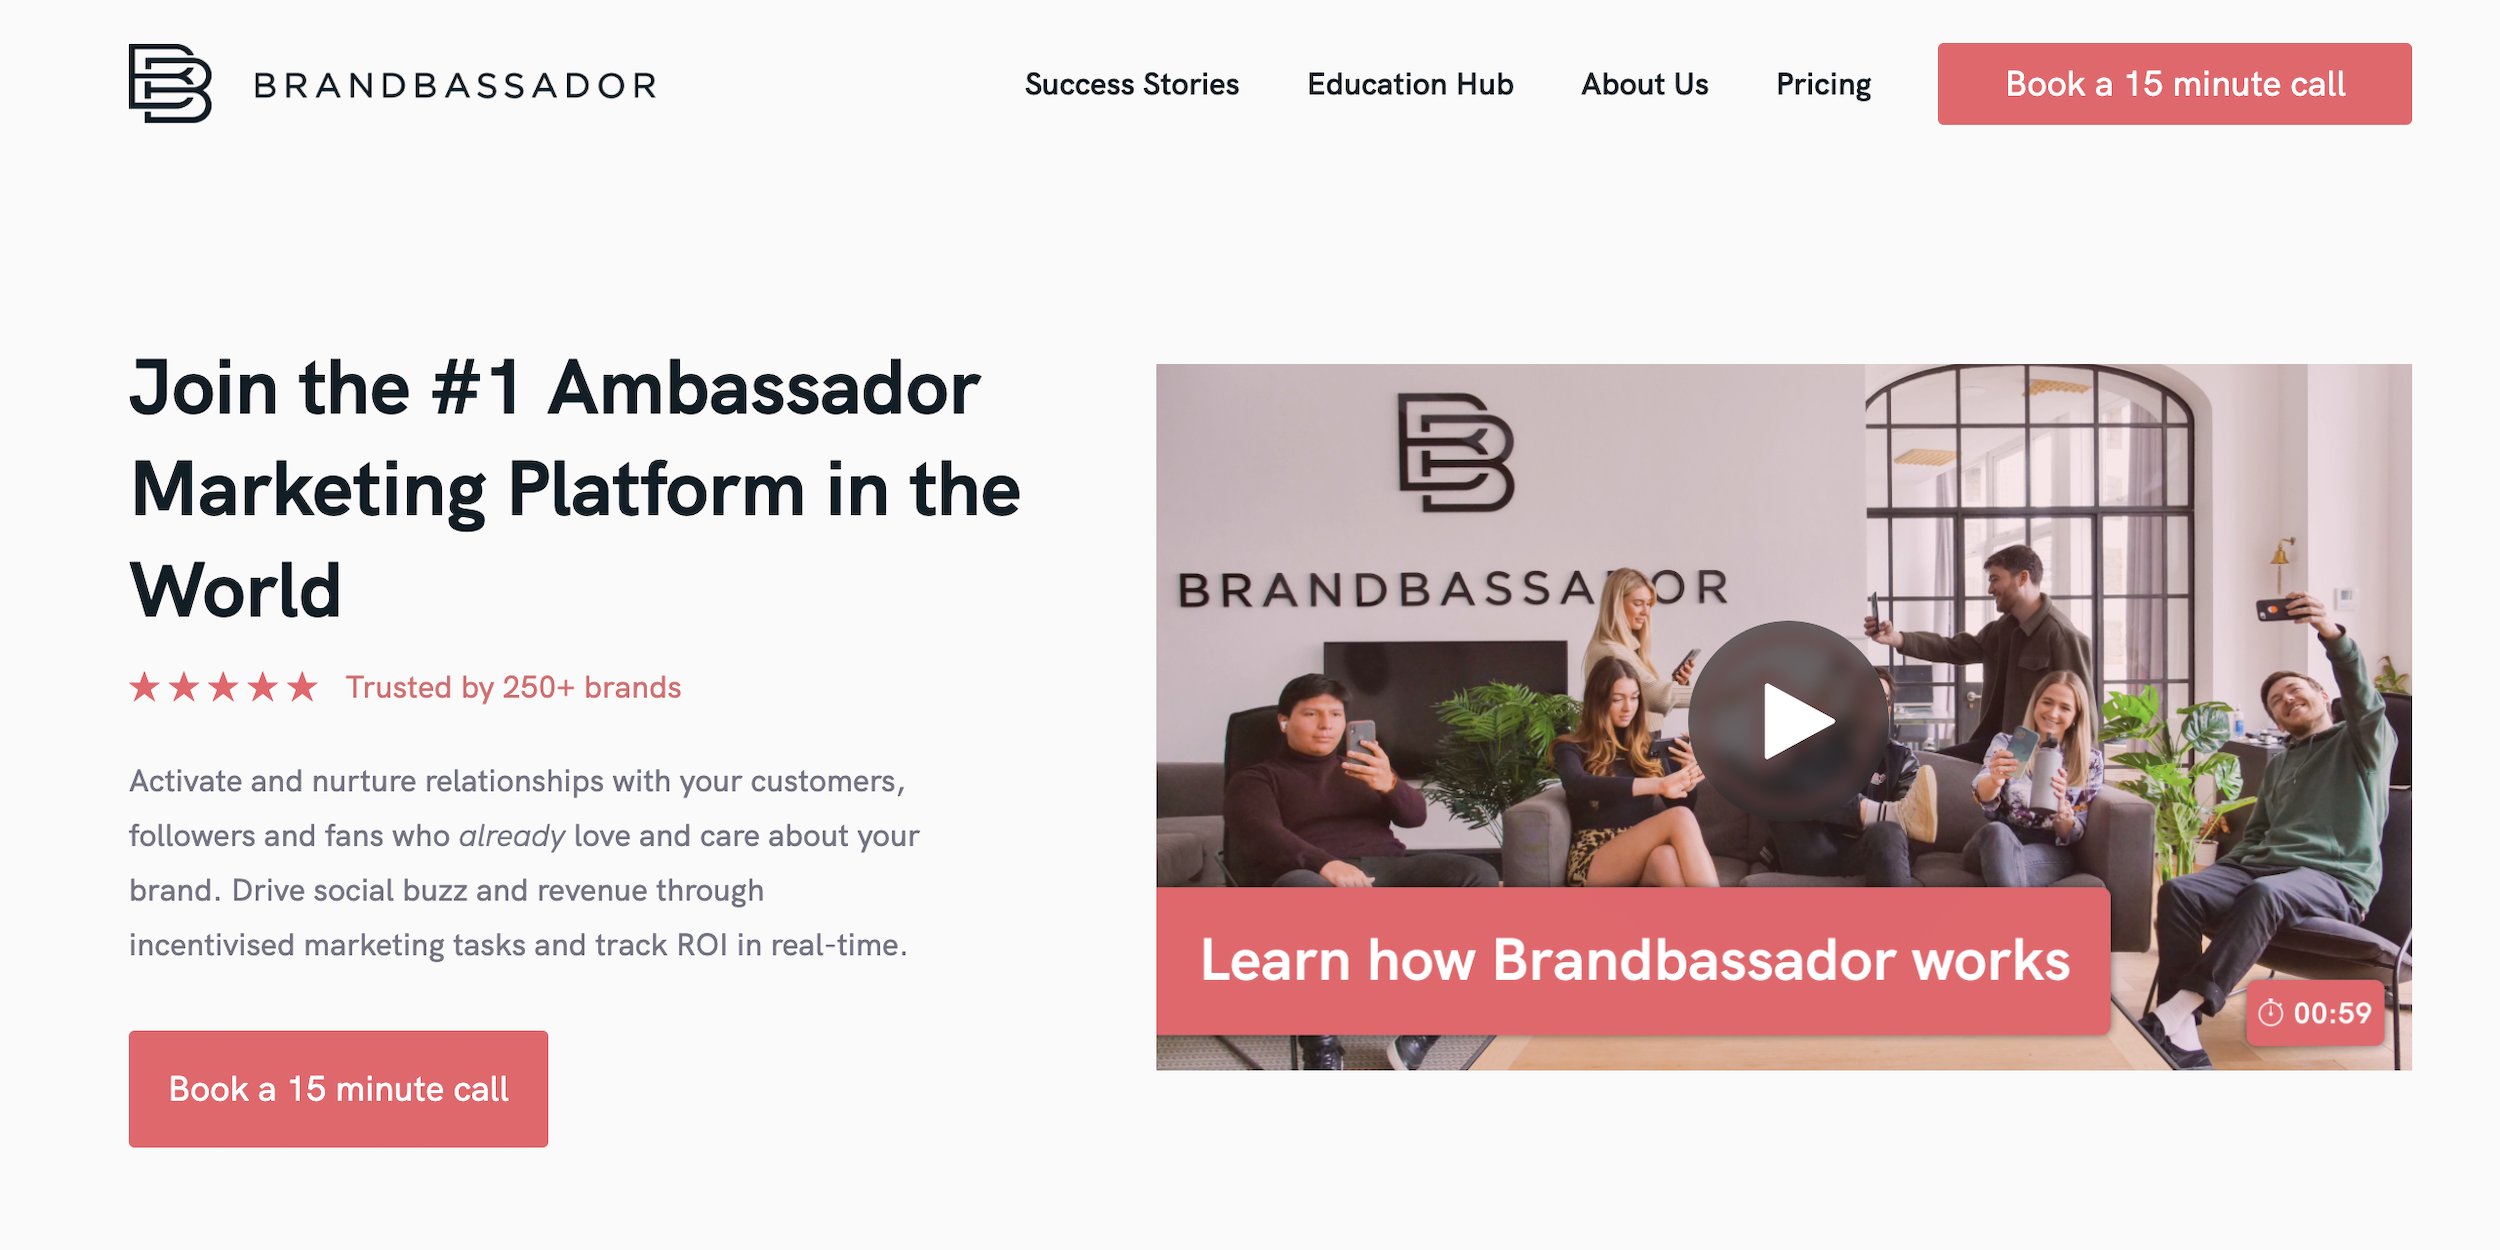 The Ultimate Ambassador Marketing Platform